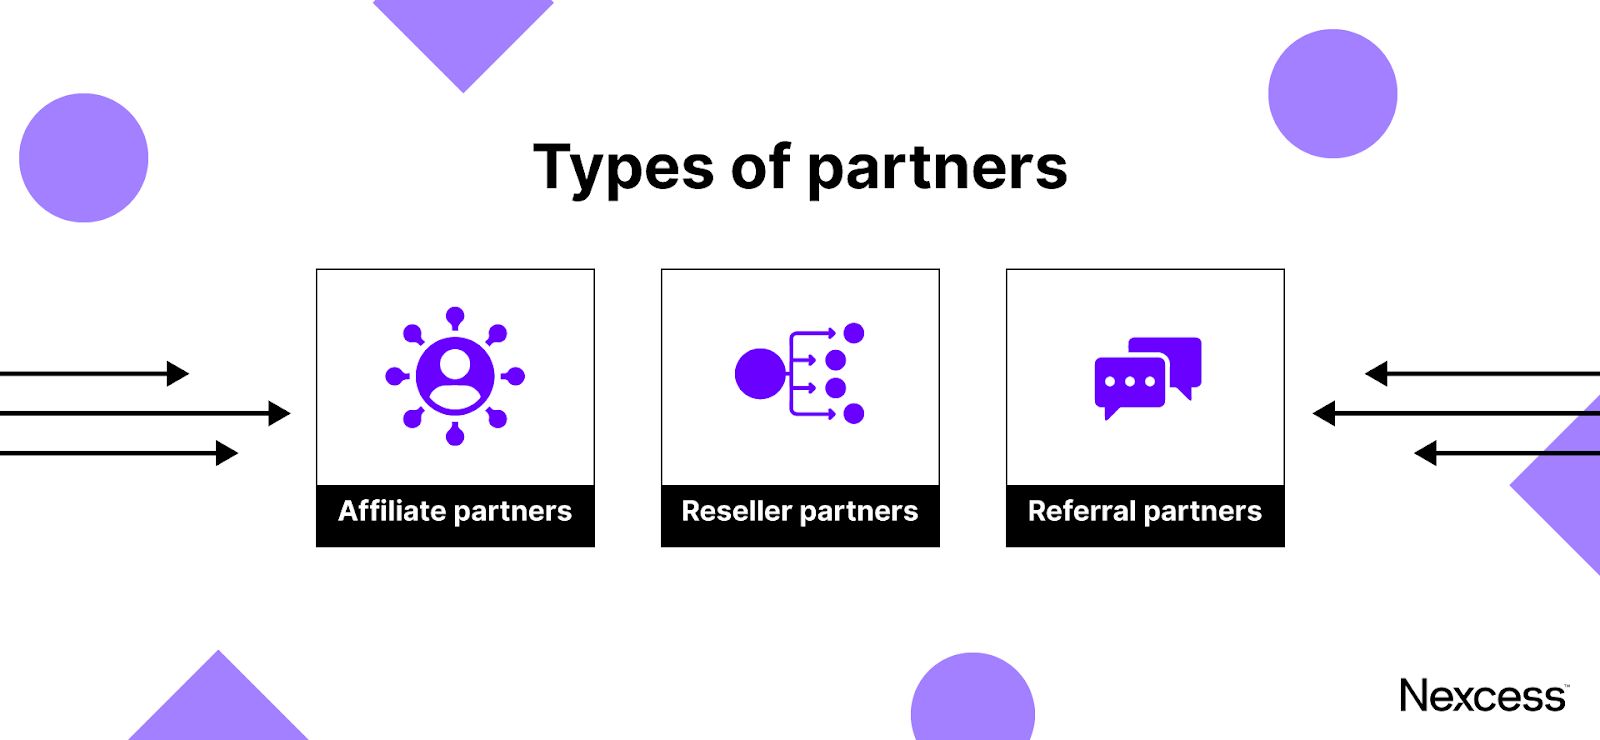 Types of partners in an agency partner program.